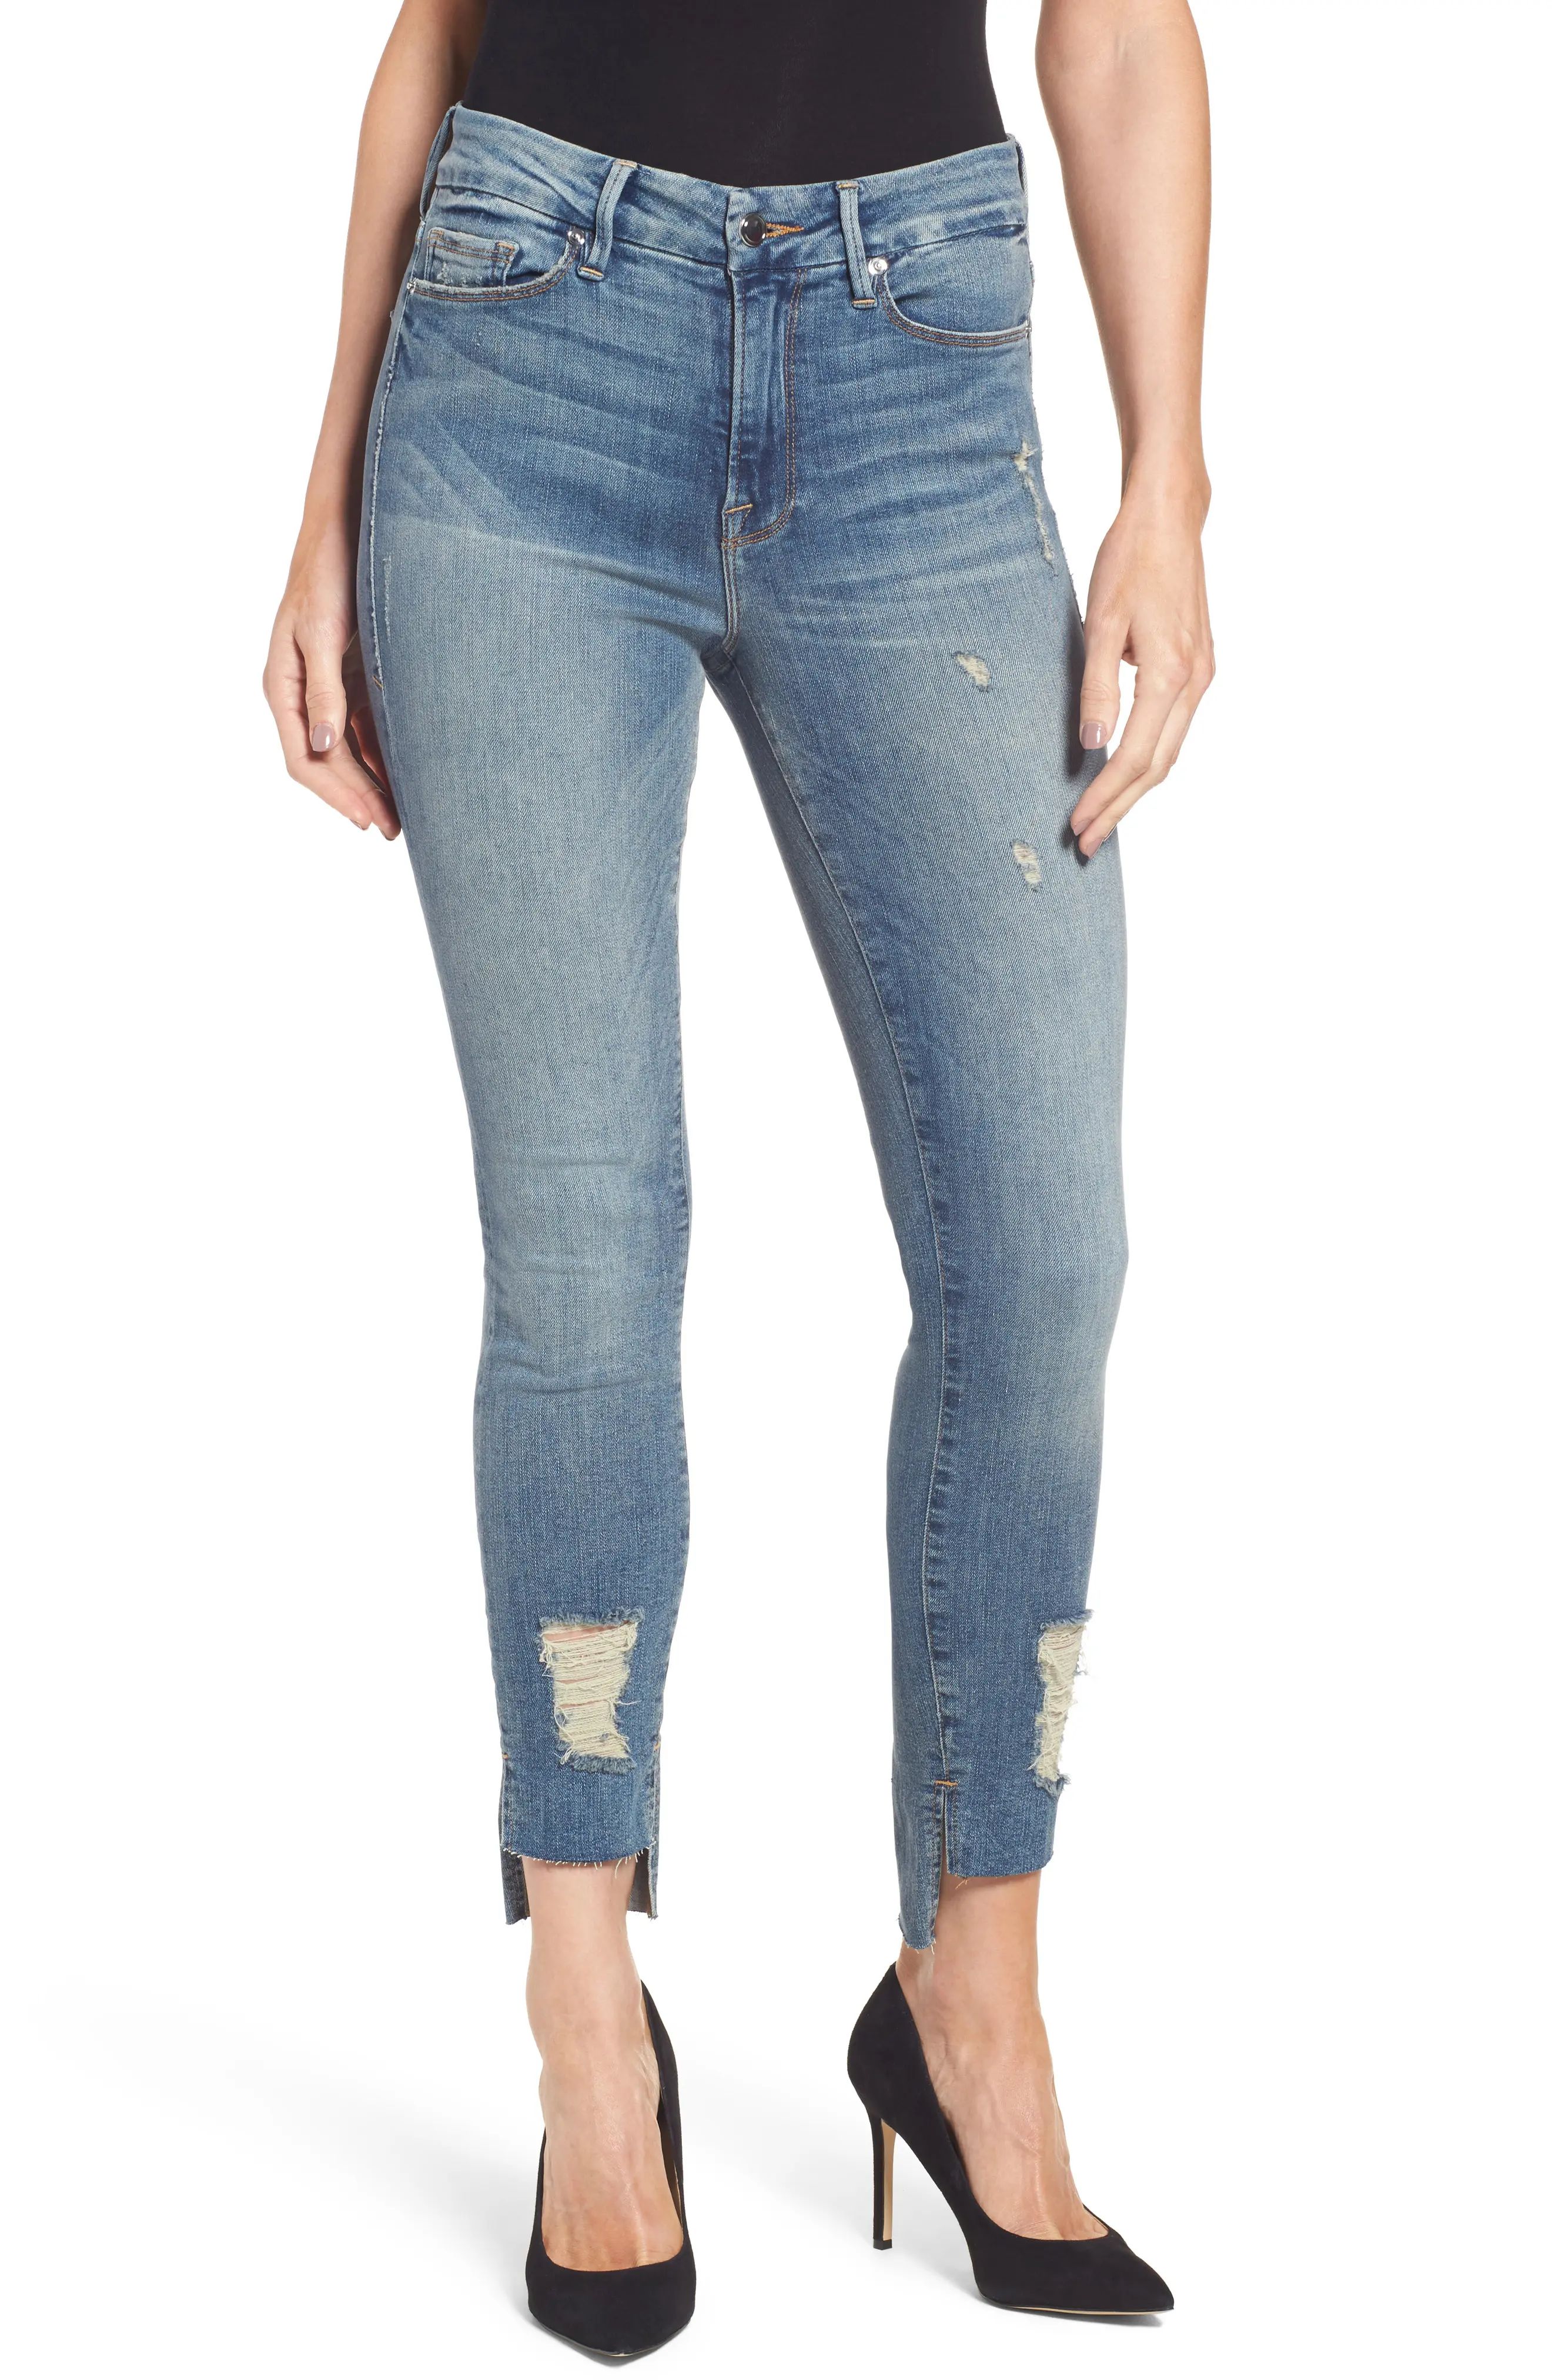 Good Legs High Waist Skinny Jeans | Nordstrom